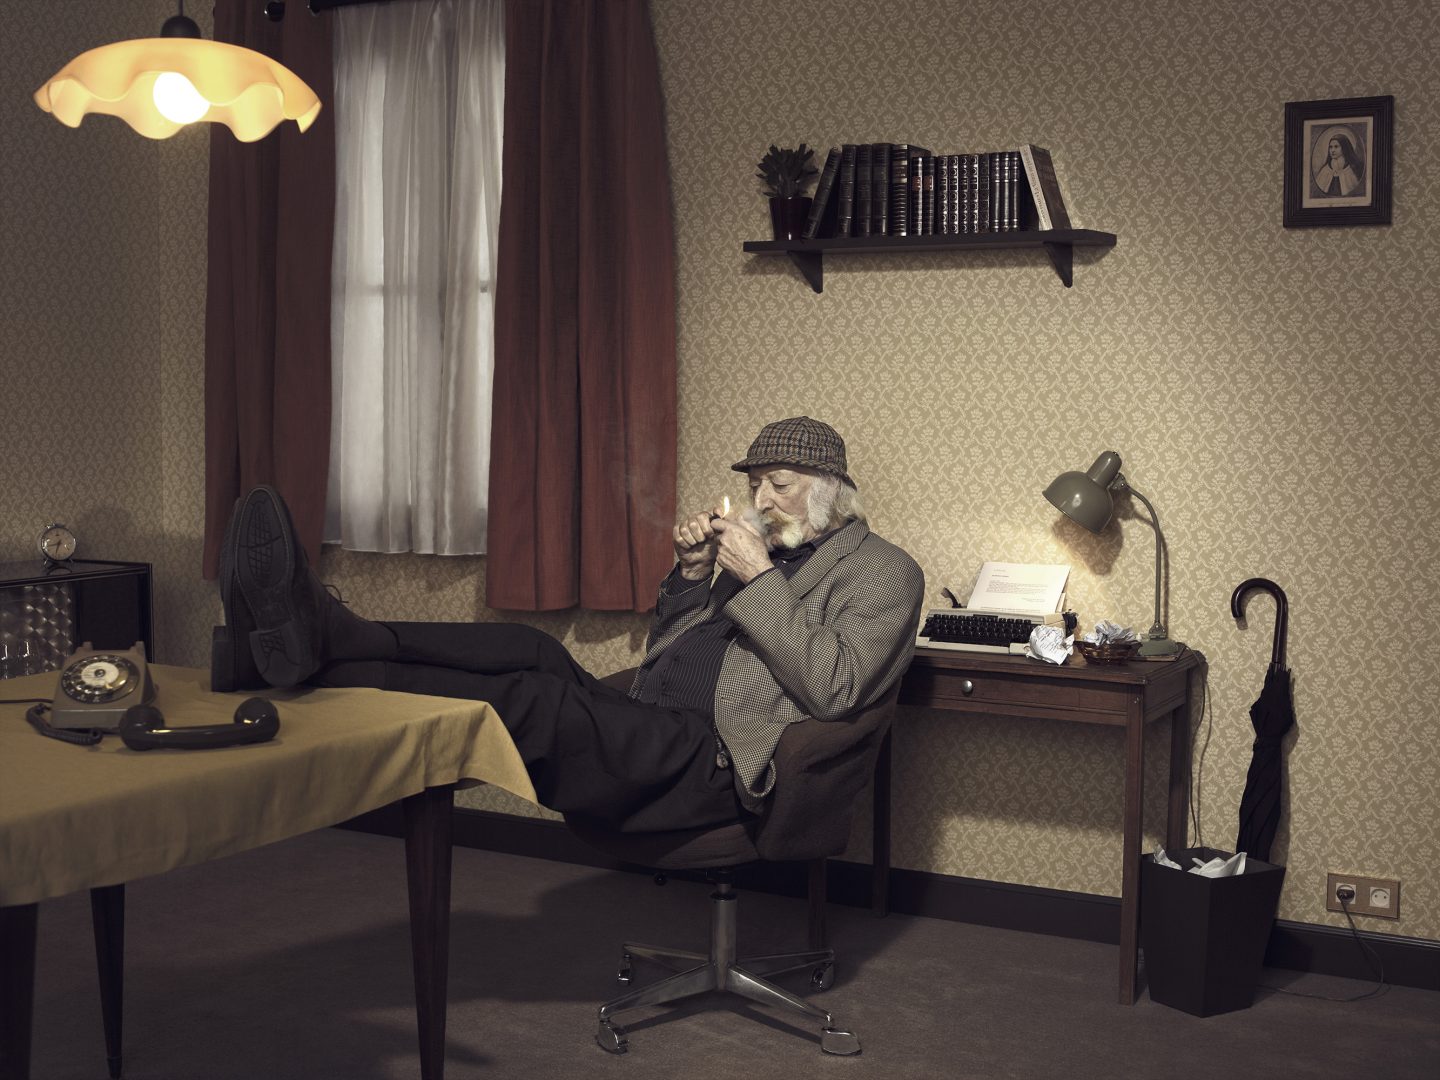 Old man with Sherlock Holmes lock lights pipe in room 42 by Stefan Rappo